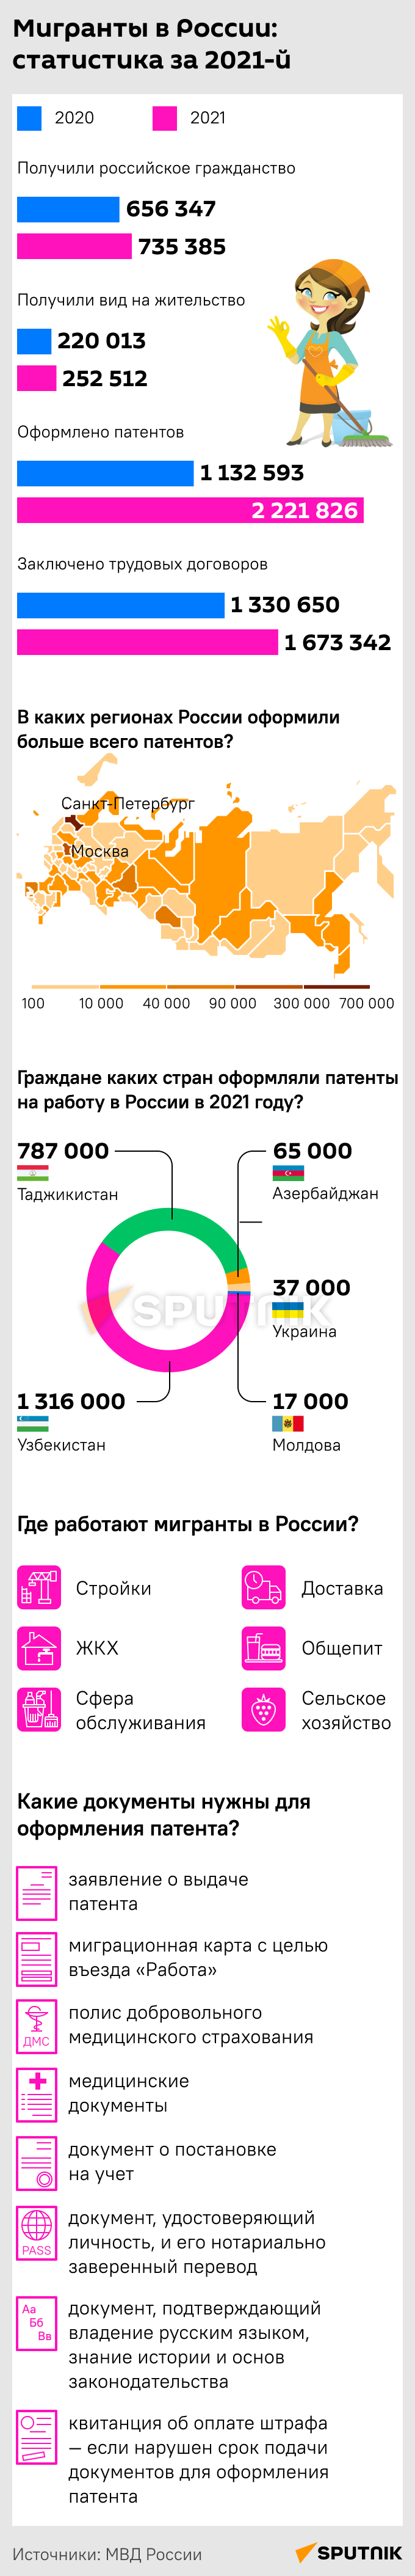 Мигранты в России: статистика за 2021-й - Sputnik Таджикистан